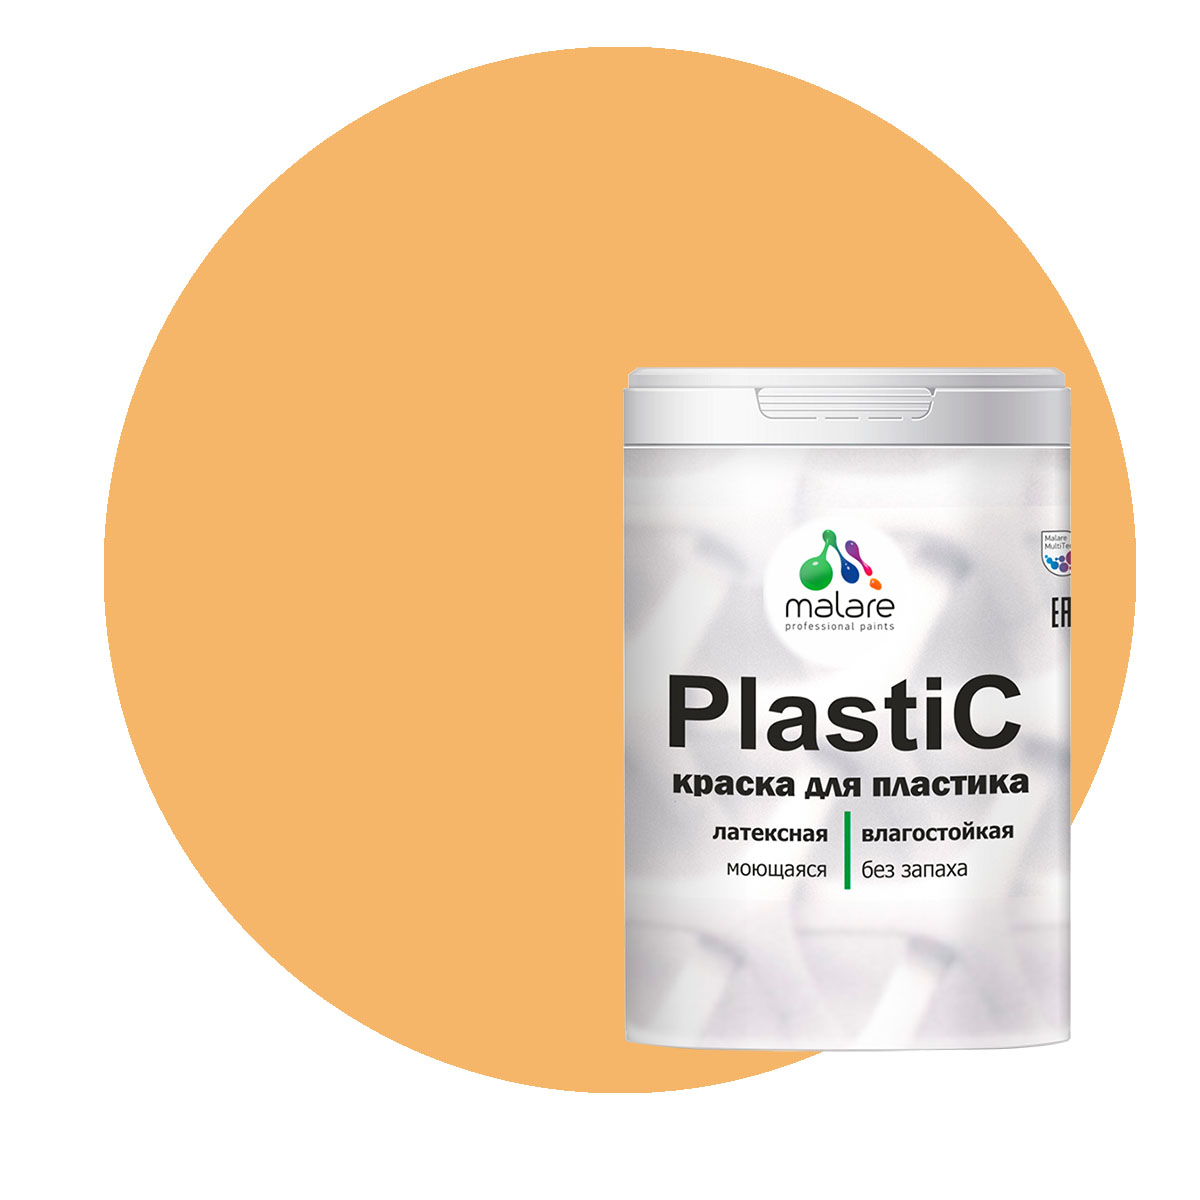 краска malare plastic для пластика пвх для сайдинга летний бриз 1 кг Краска Malare PlastiC для пластика, ПВХ, для сайдинга, оранжевый закат 2 кг.